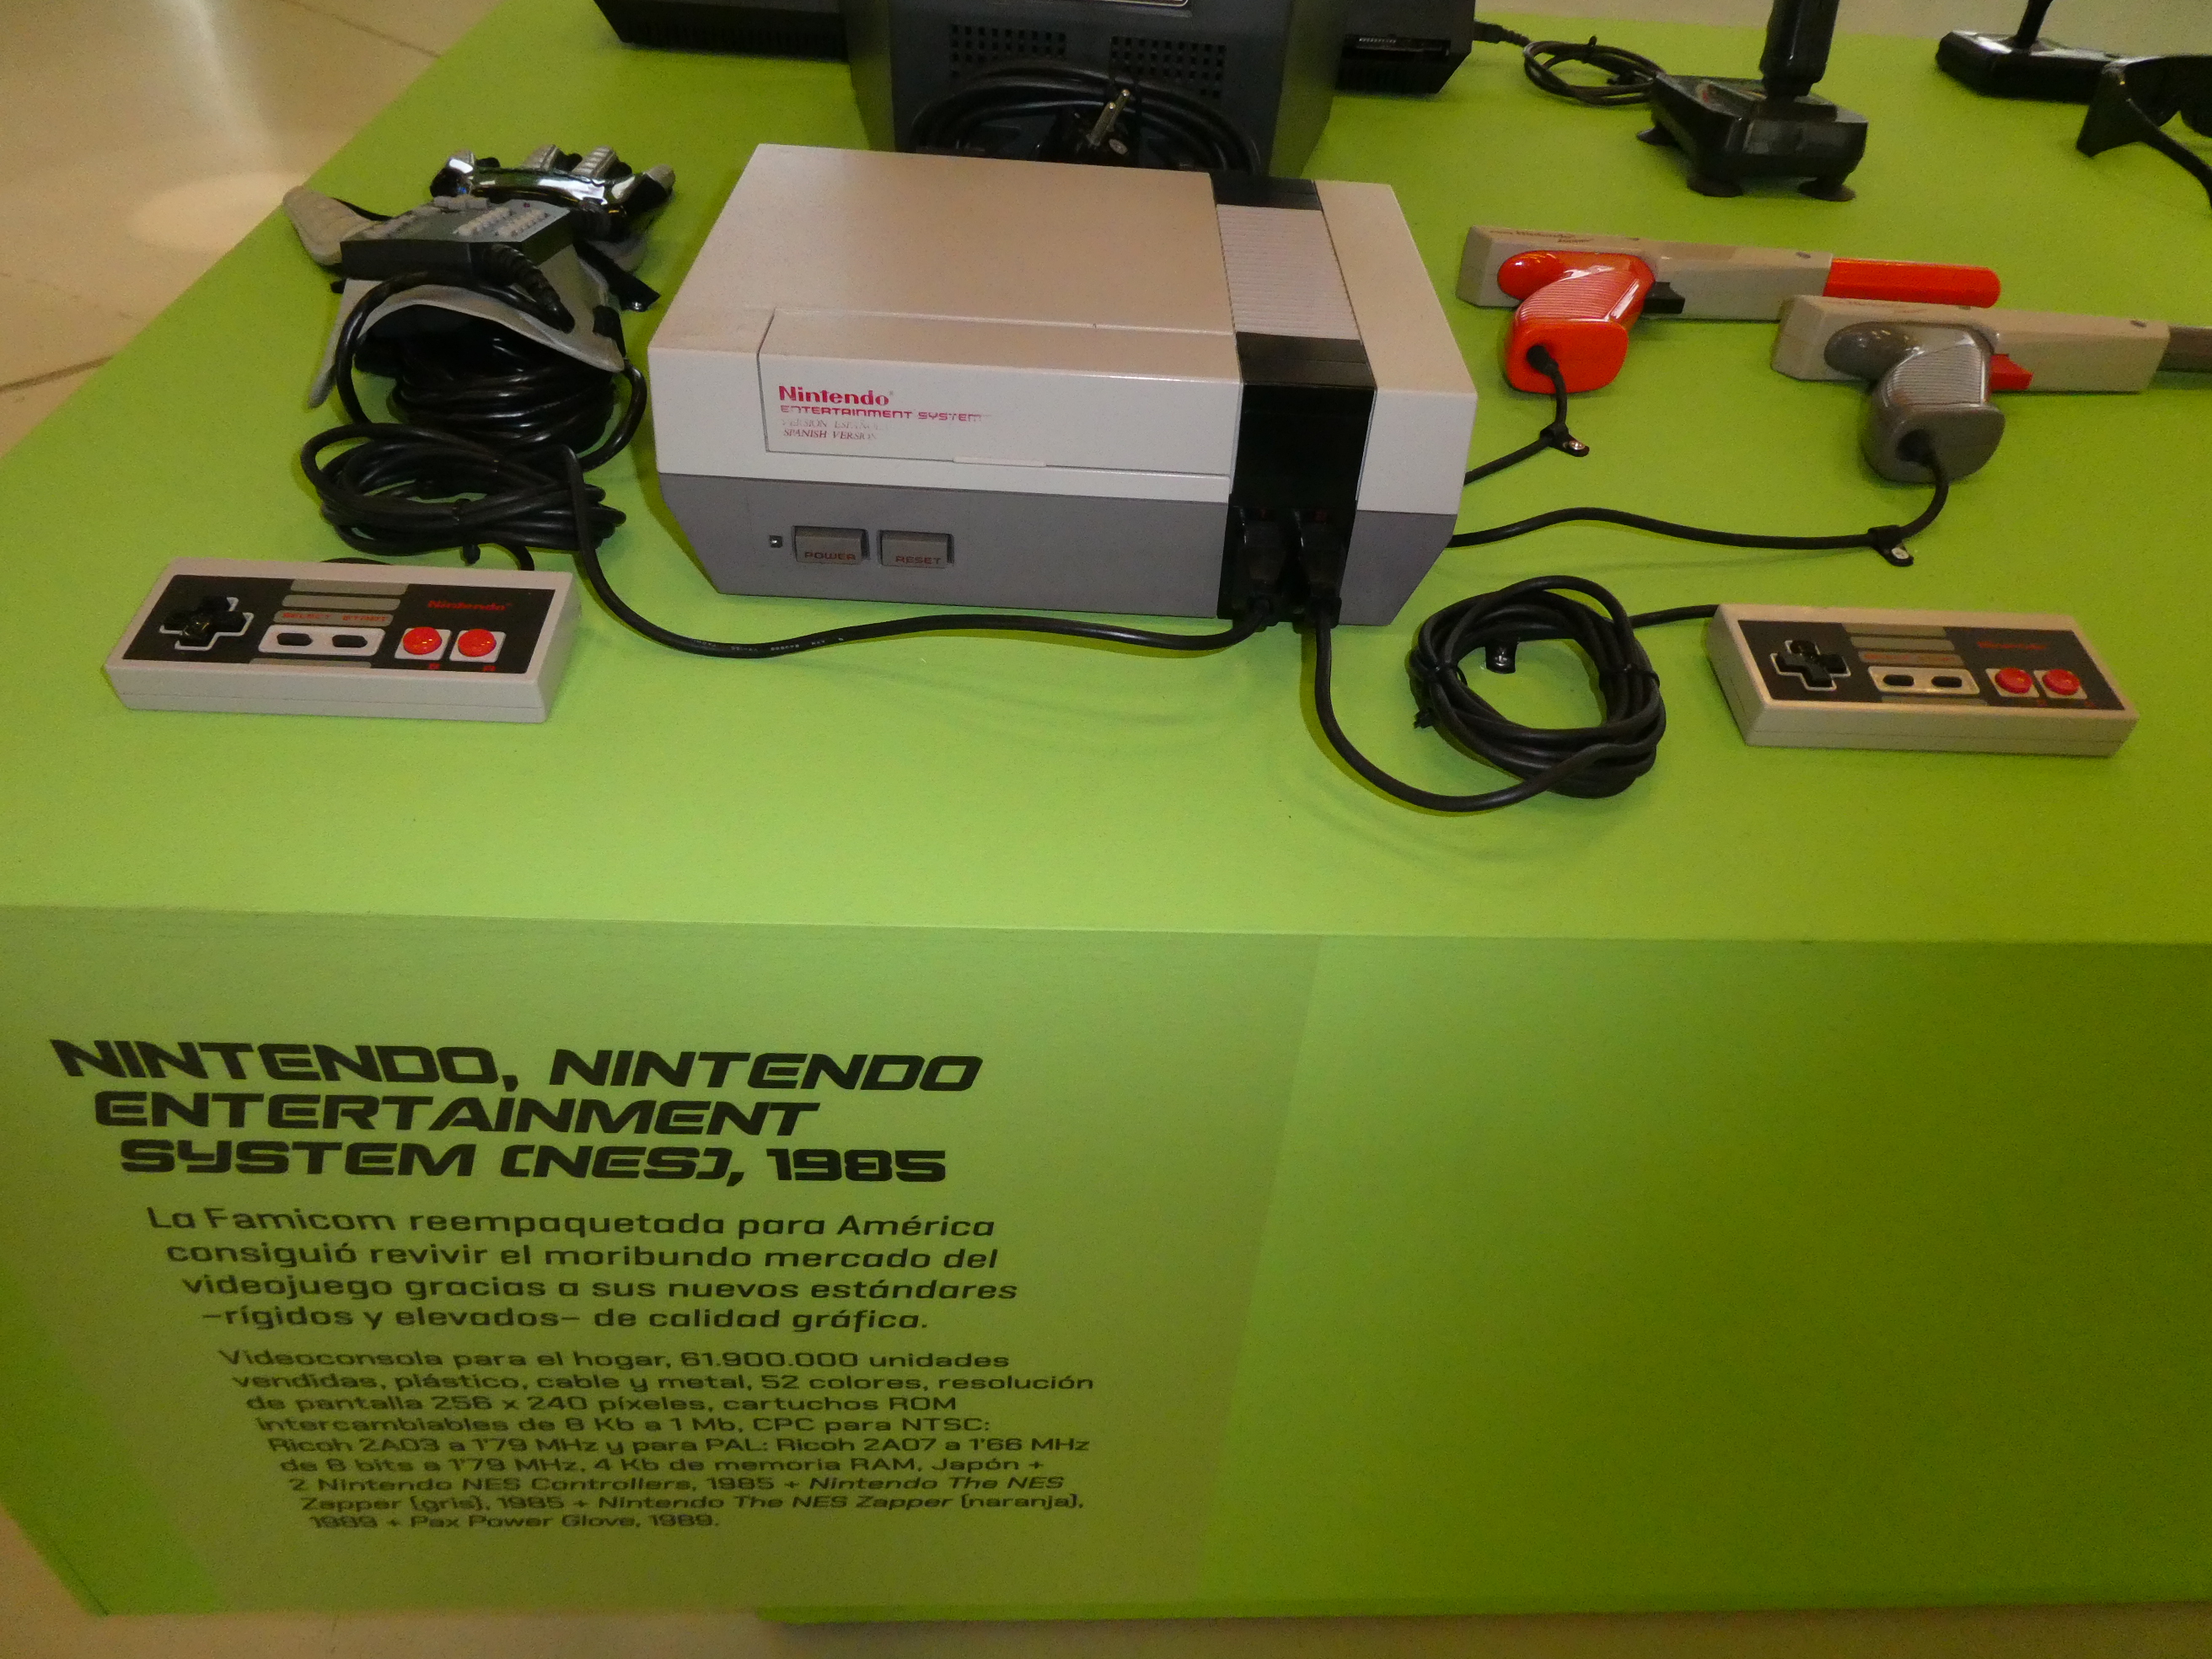 budget At blokere Vild File:Nintendo Entertainment System NES (1985) 1.jpg - Wikimedia Commons